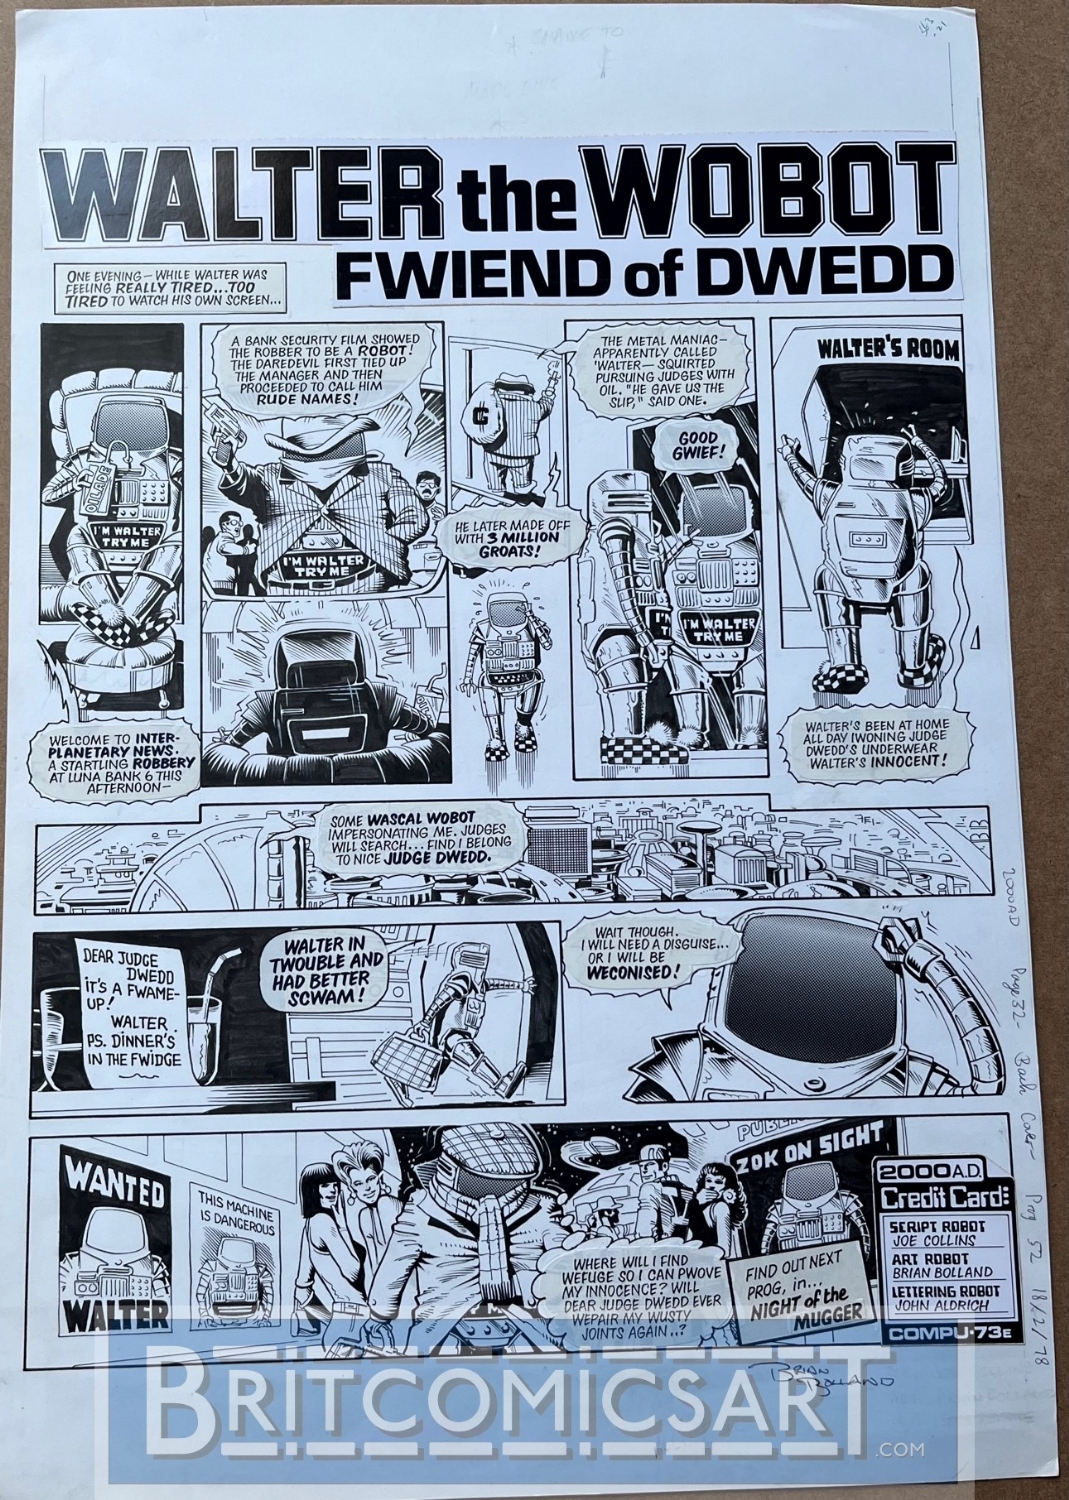 Brit Comics Art :: Original Comic Art by Brian Bolland